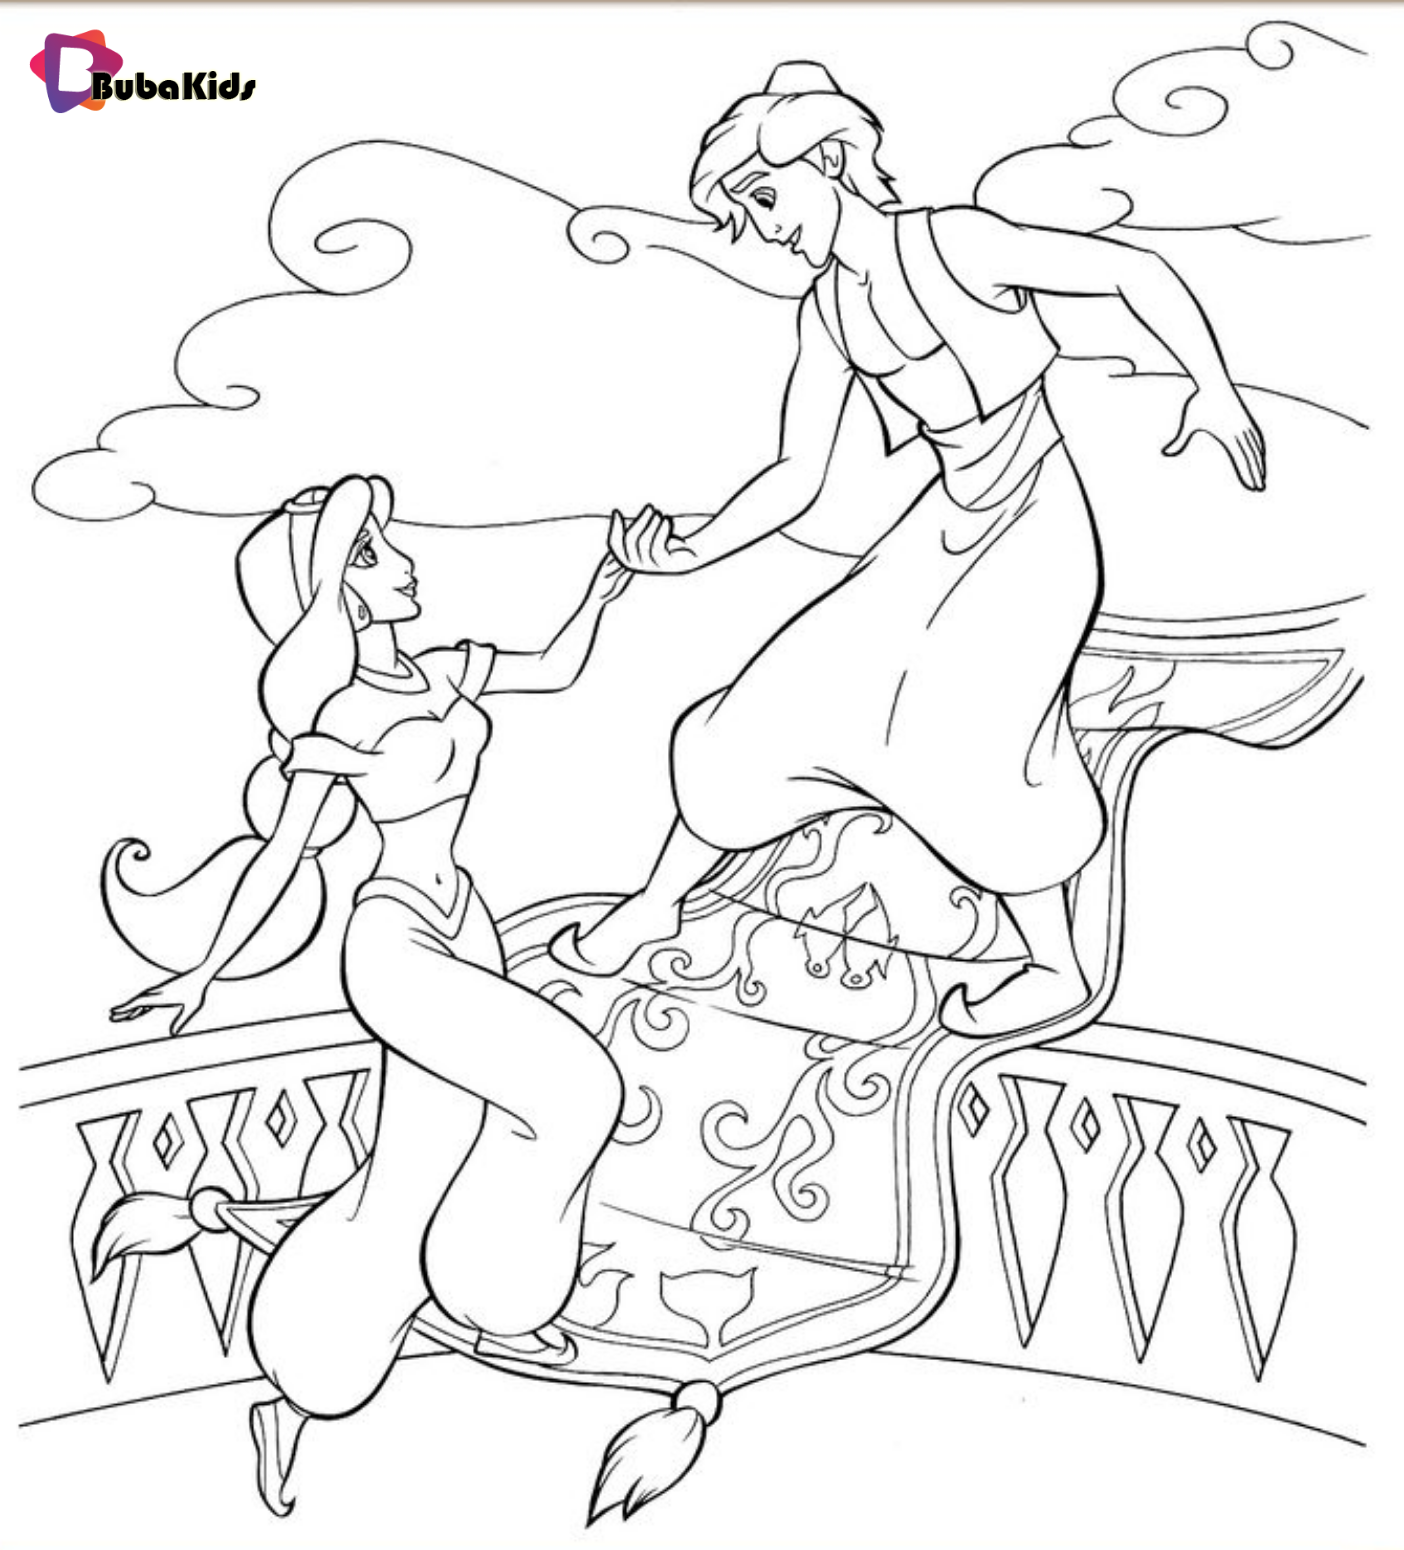 Disneys Aladdin and Princess Jasmine Coloring Page on bubakids.com